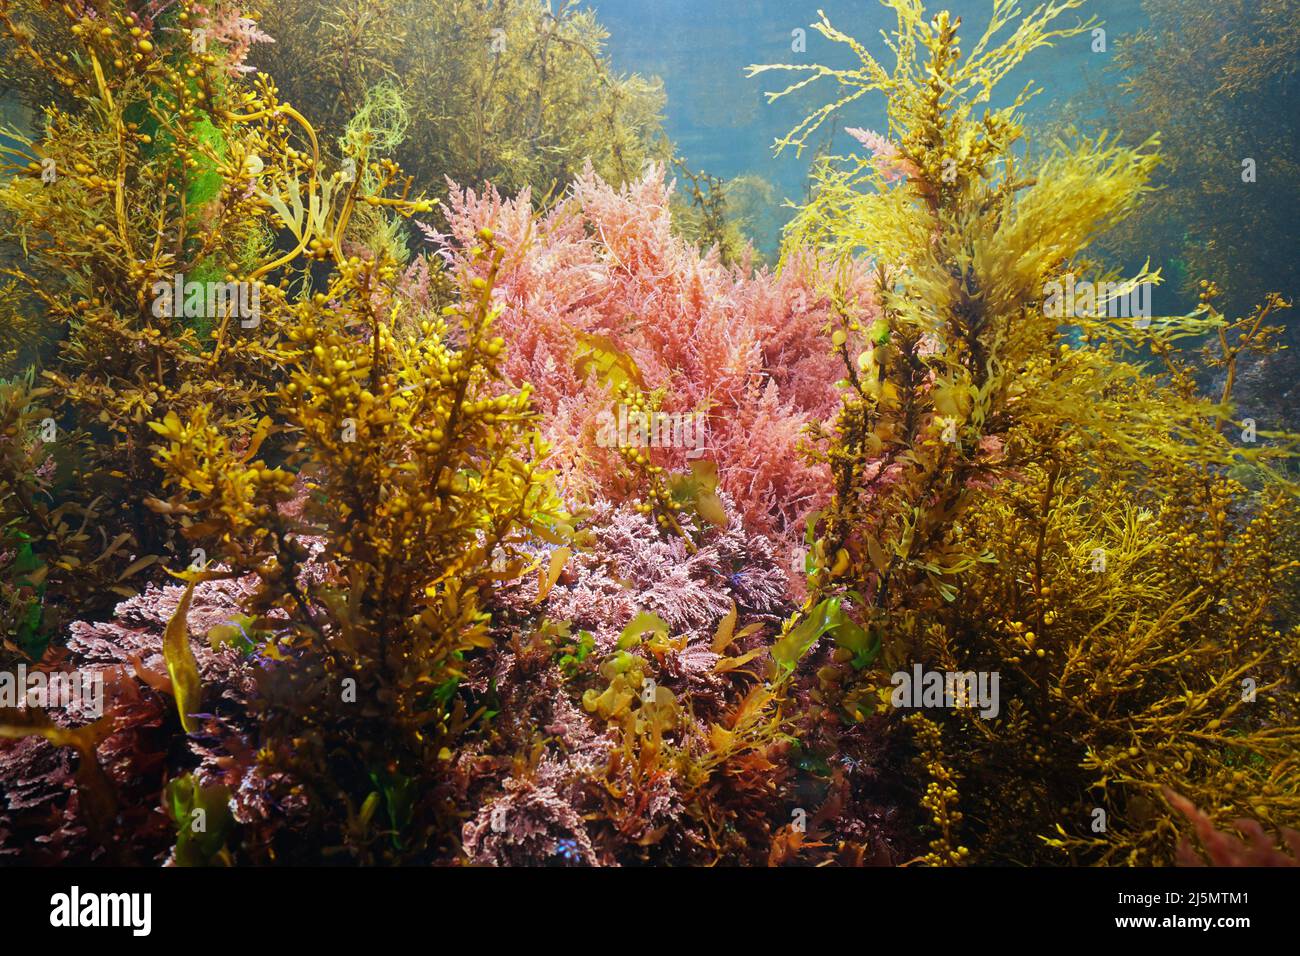 Diverses algues marines sous l'eau de l'océan, algues de l'Atlantique est, Espagne Banque D'Images